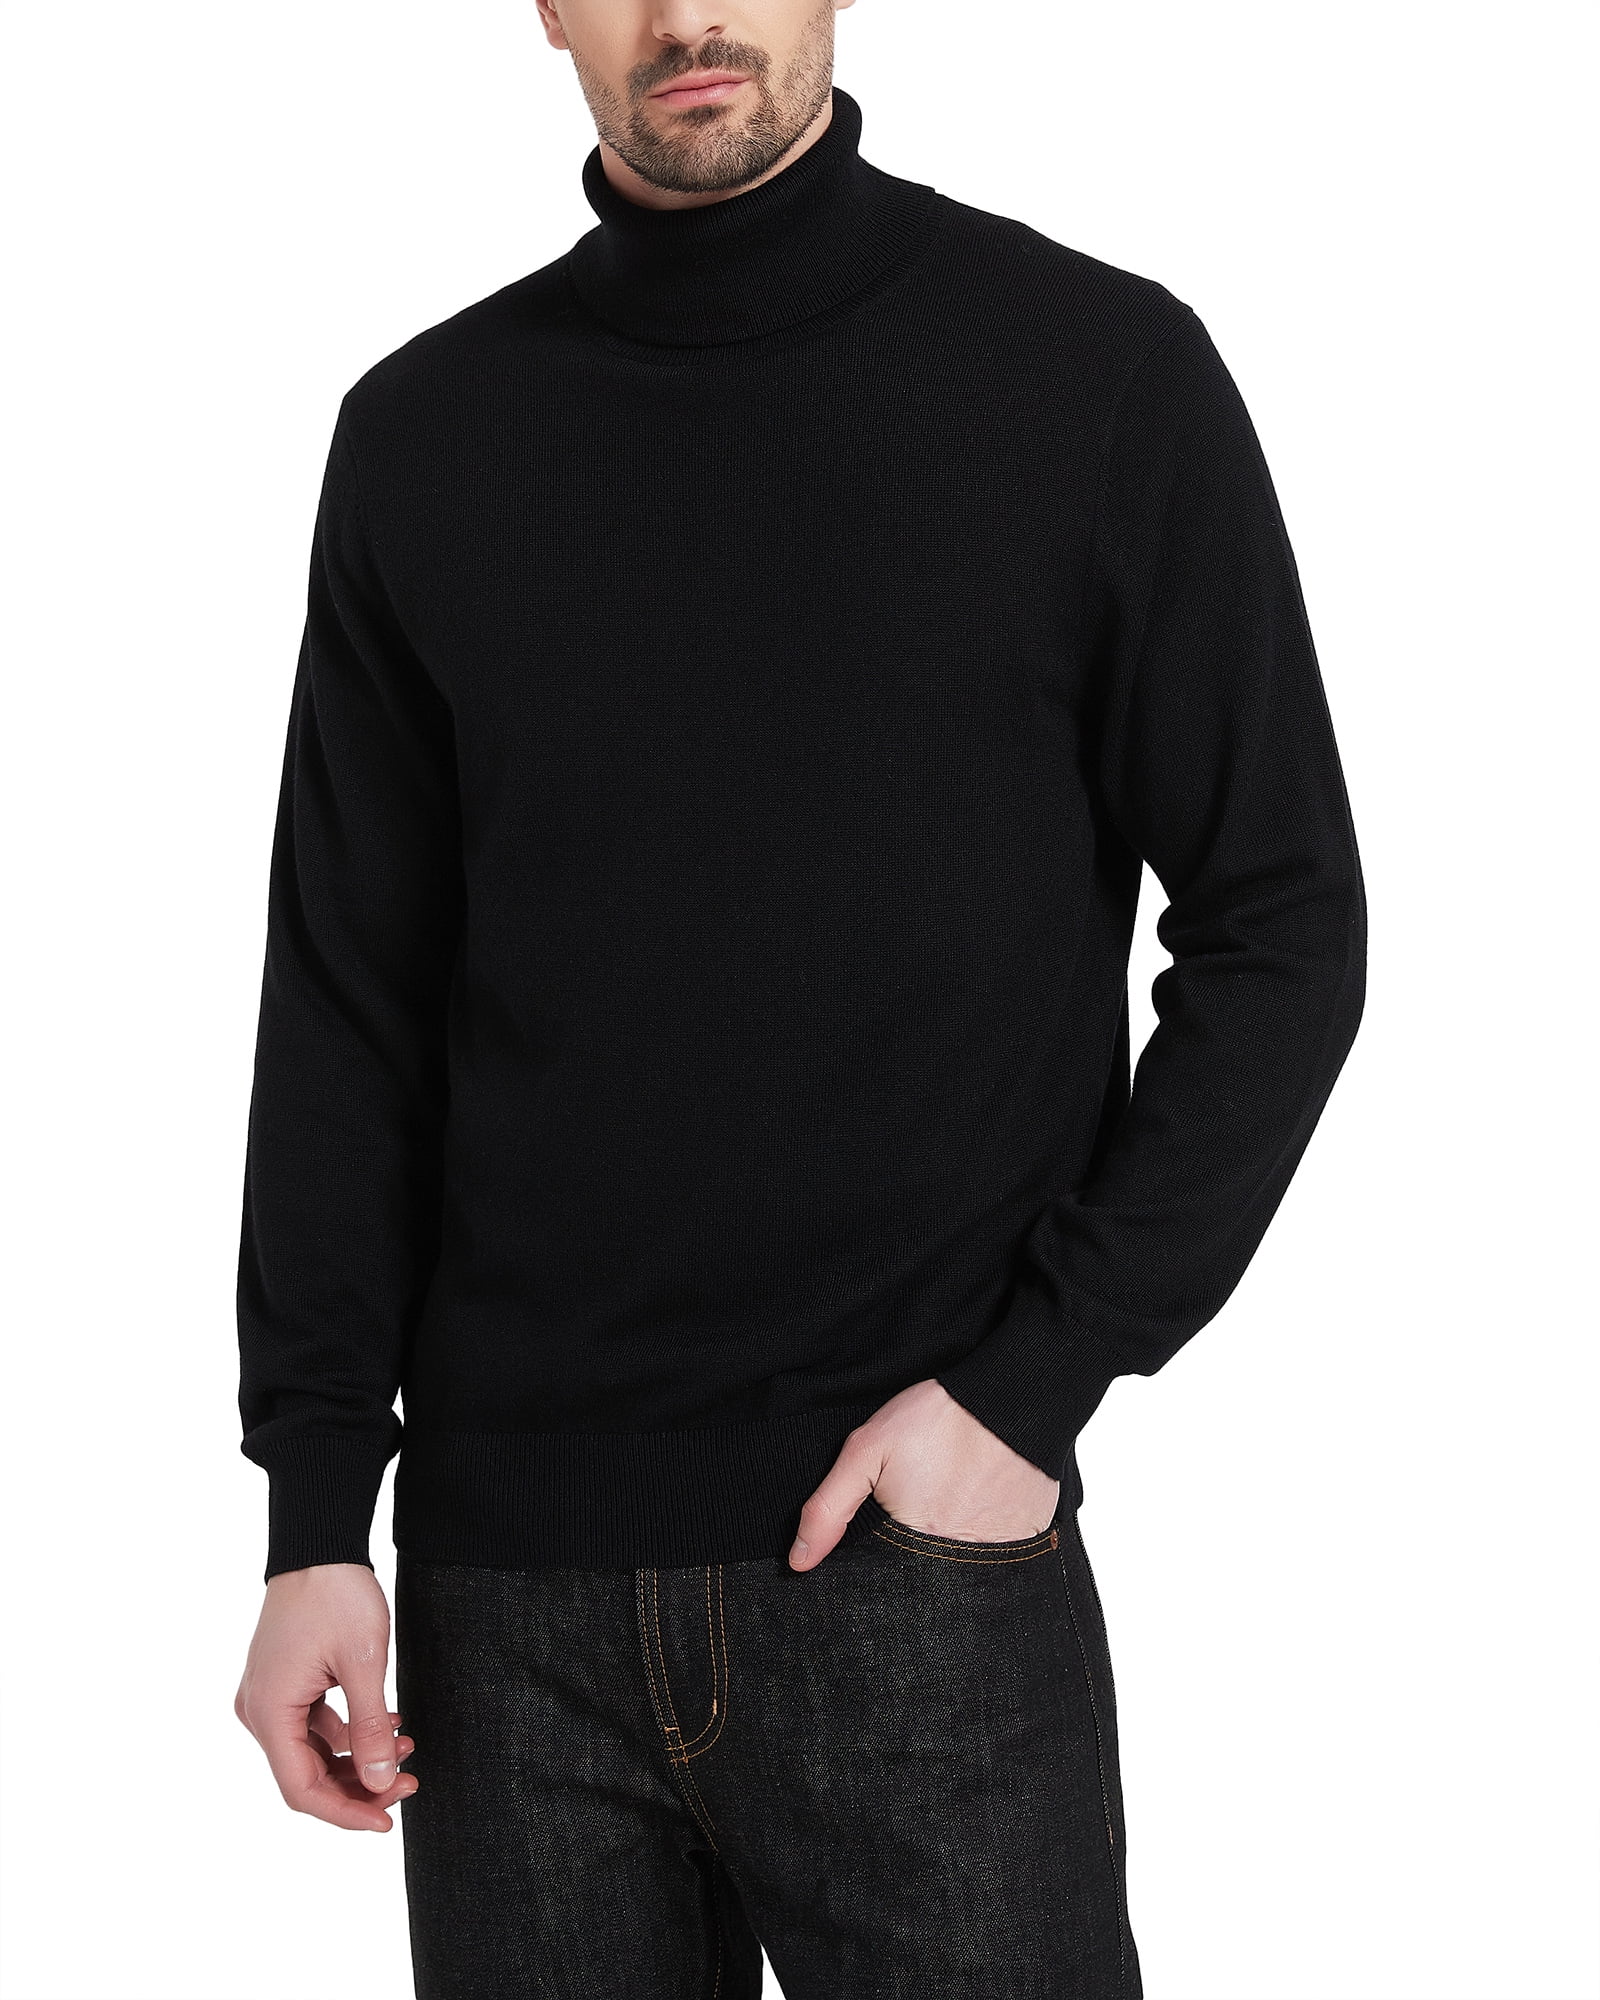 Kallspin Men's Turtleneck Sweaters Wool Blend Lightweight Pullover ...